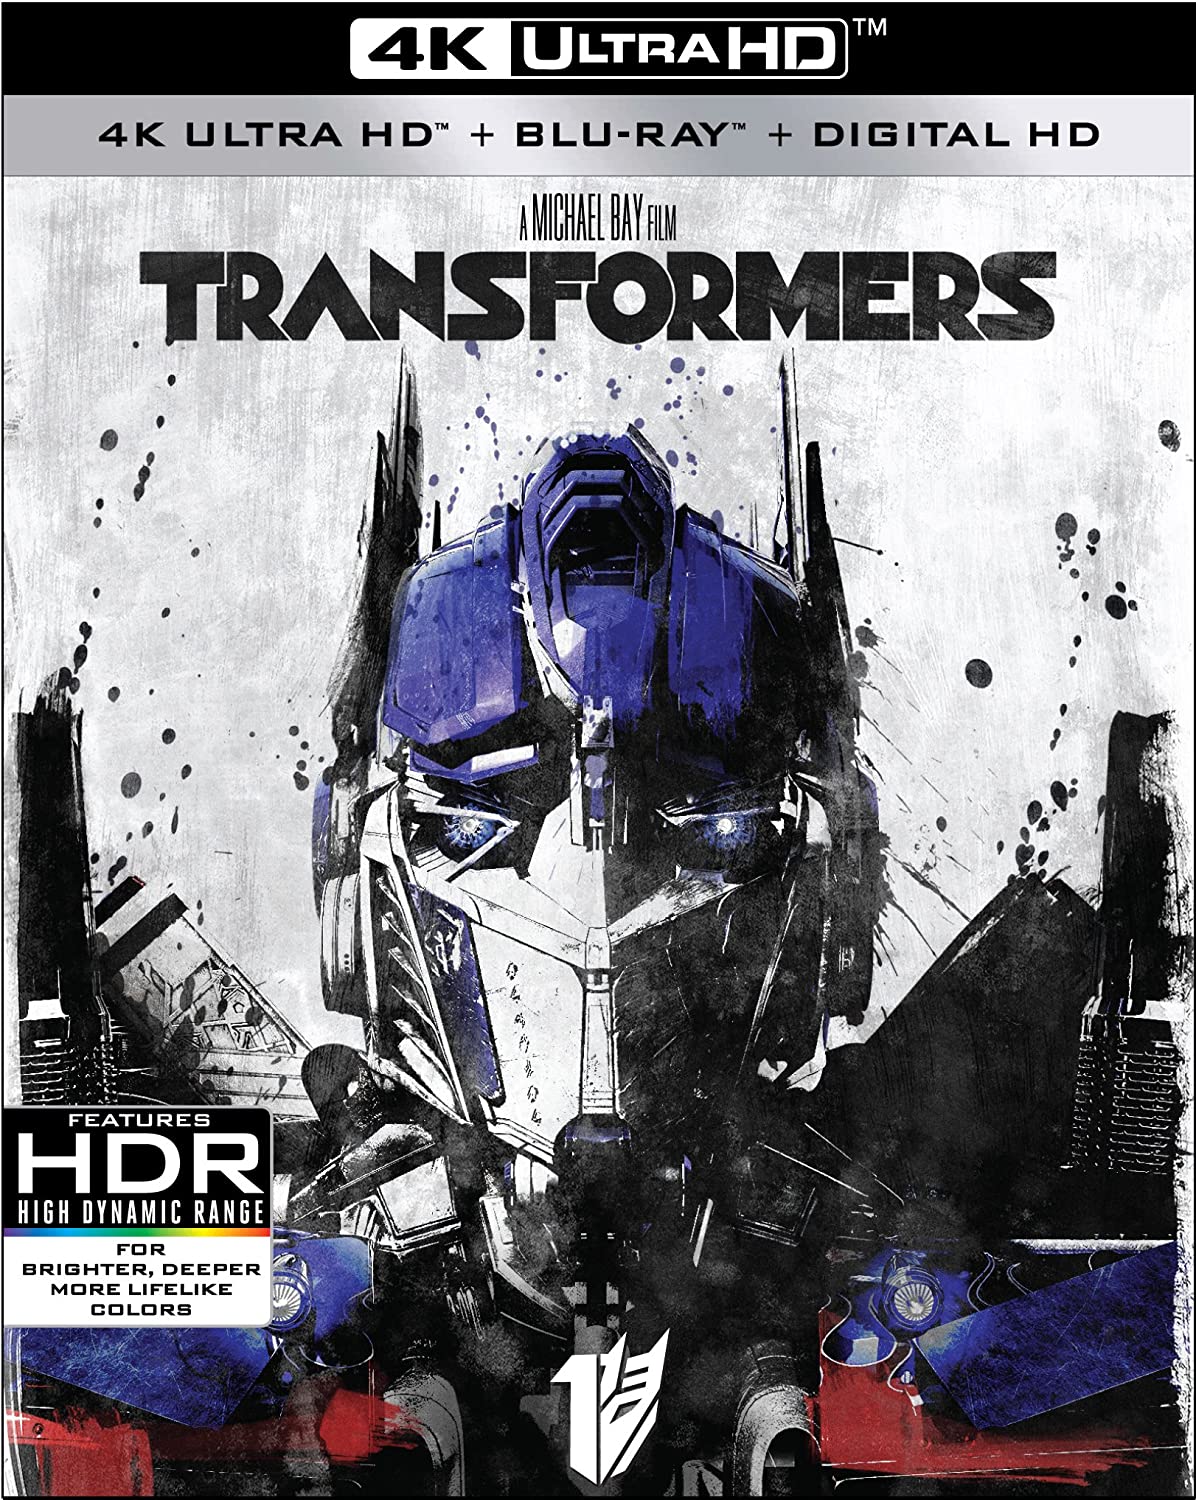 Stiahni si UHD Filmy Transformers (2007)(CZ/EN)[2160p] = CSFD 77%